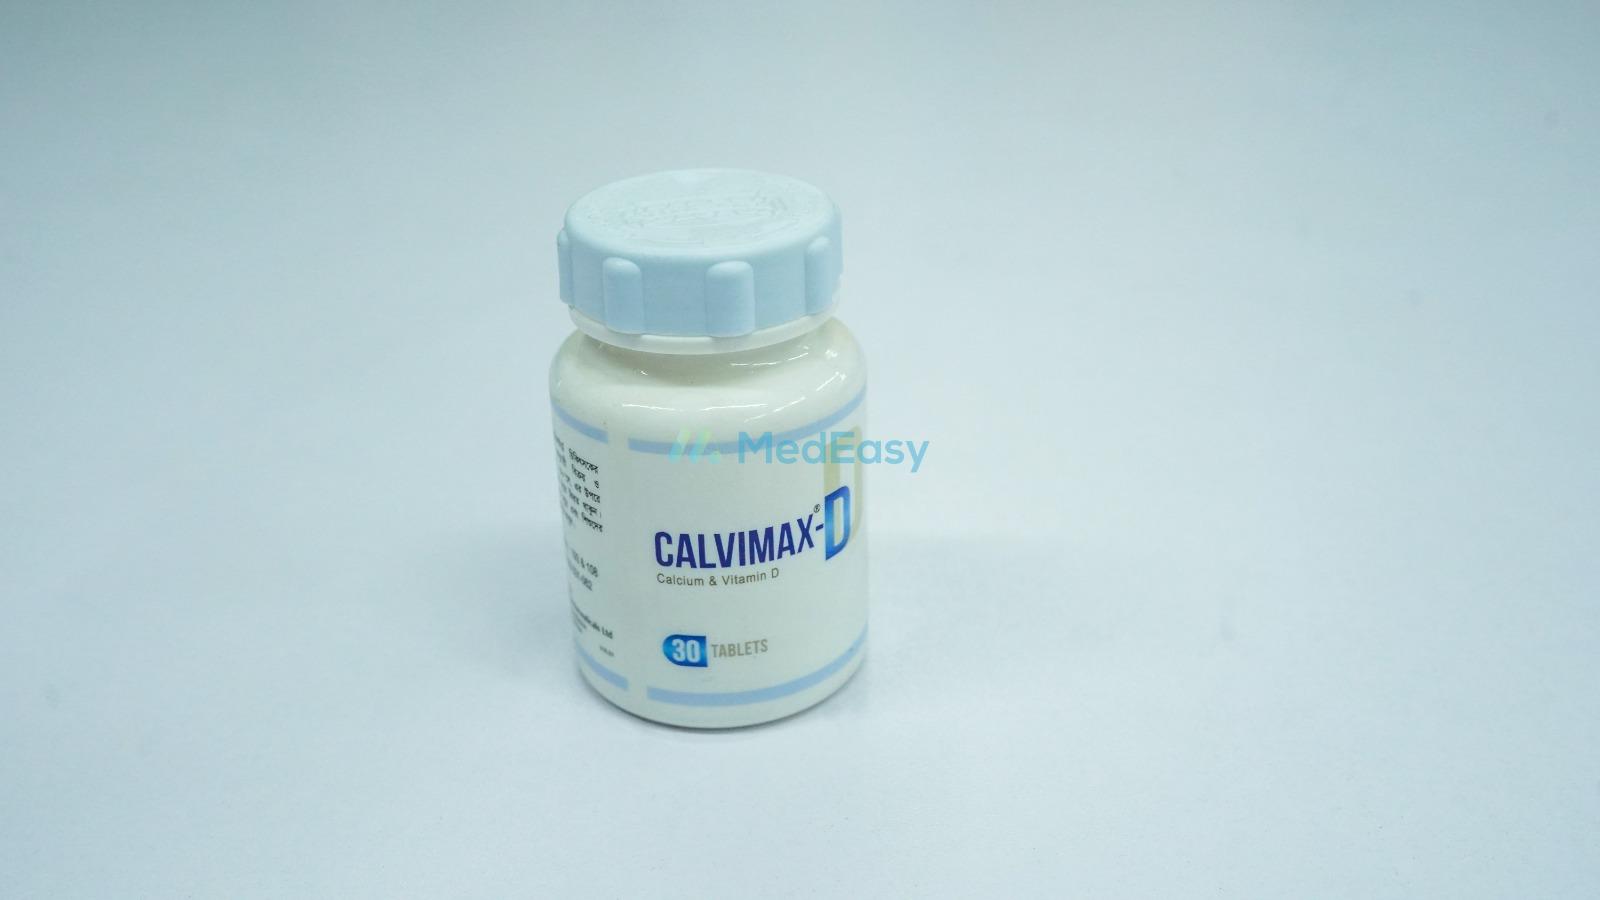 Calvimax D